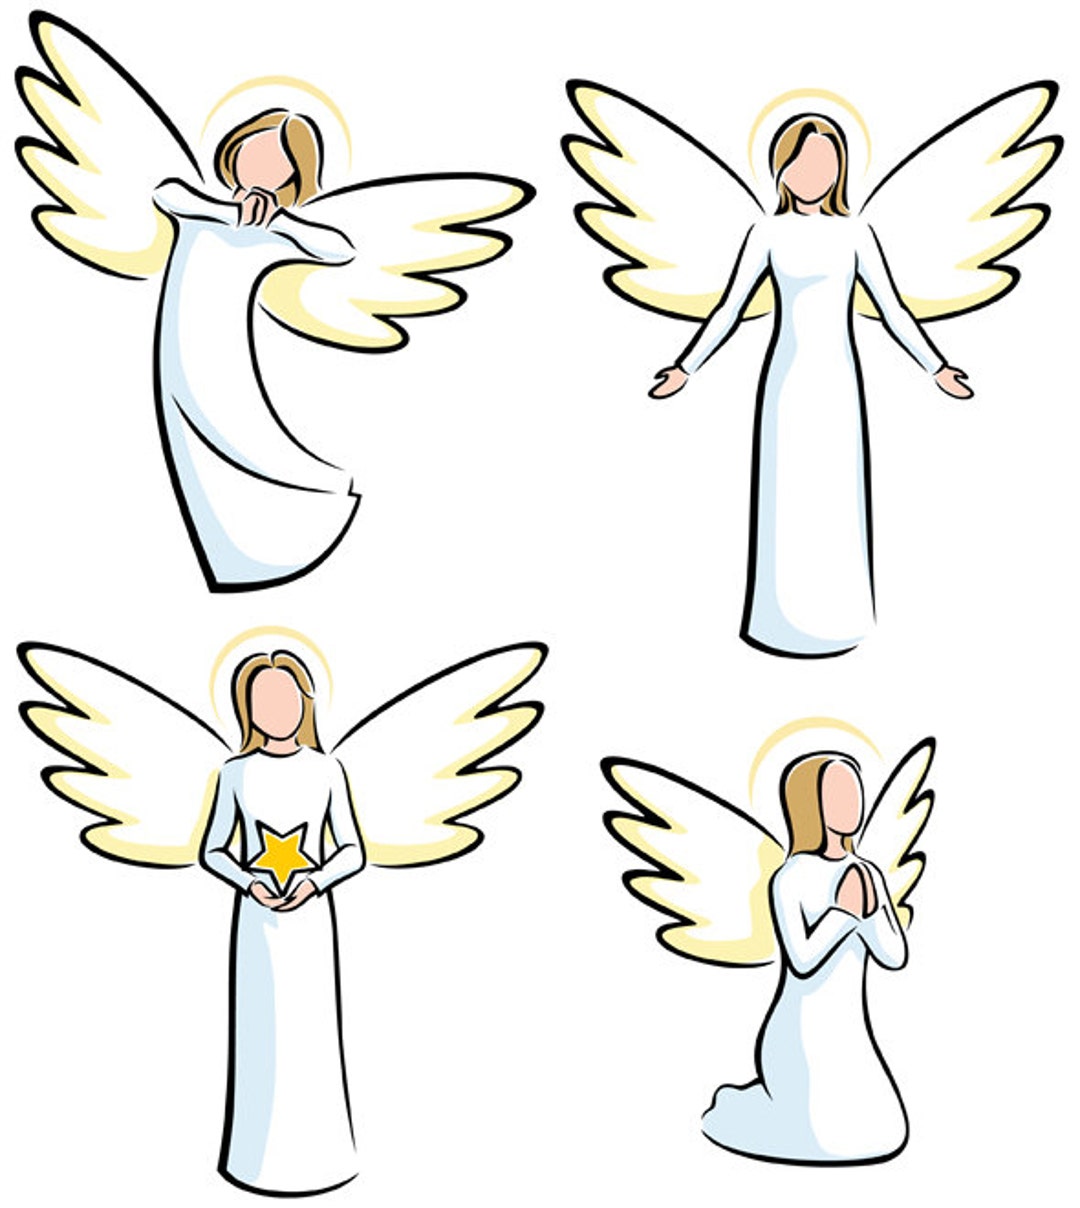 Illustration Angel